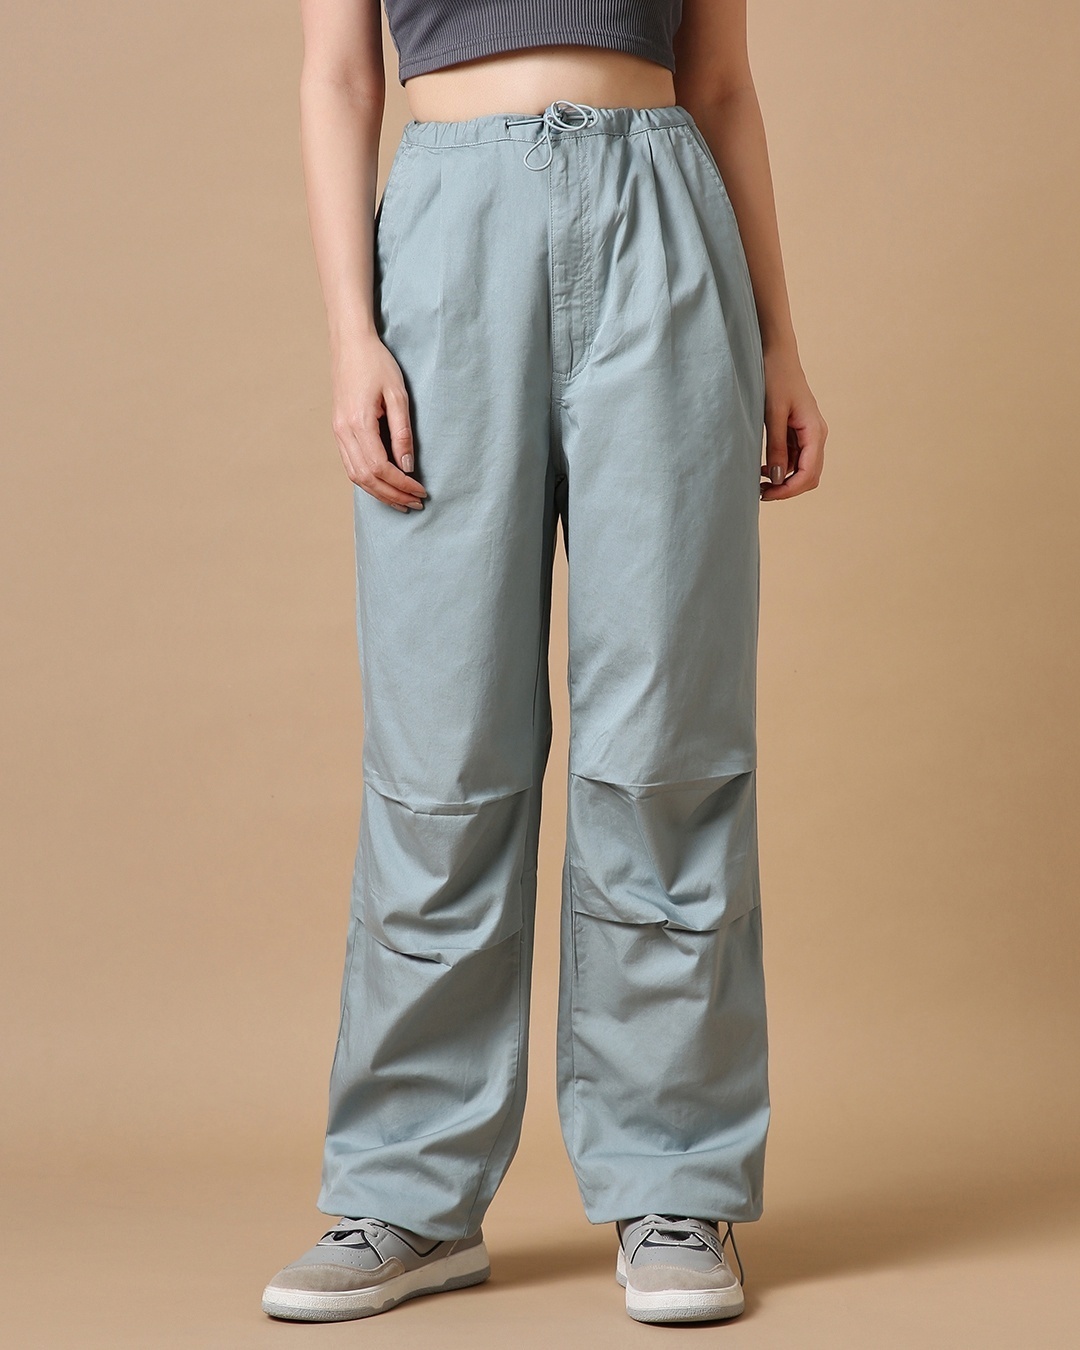 Zara Parachute Pants Wide-Leg Relaxed Fit Ripstop Brown Tan Womens Size 0 |  eBay